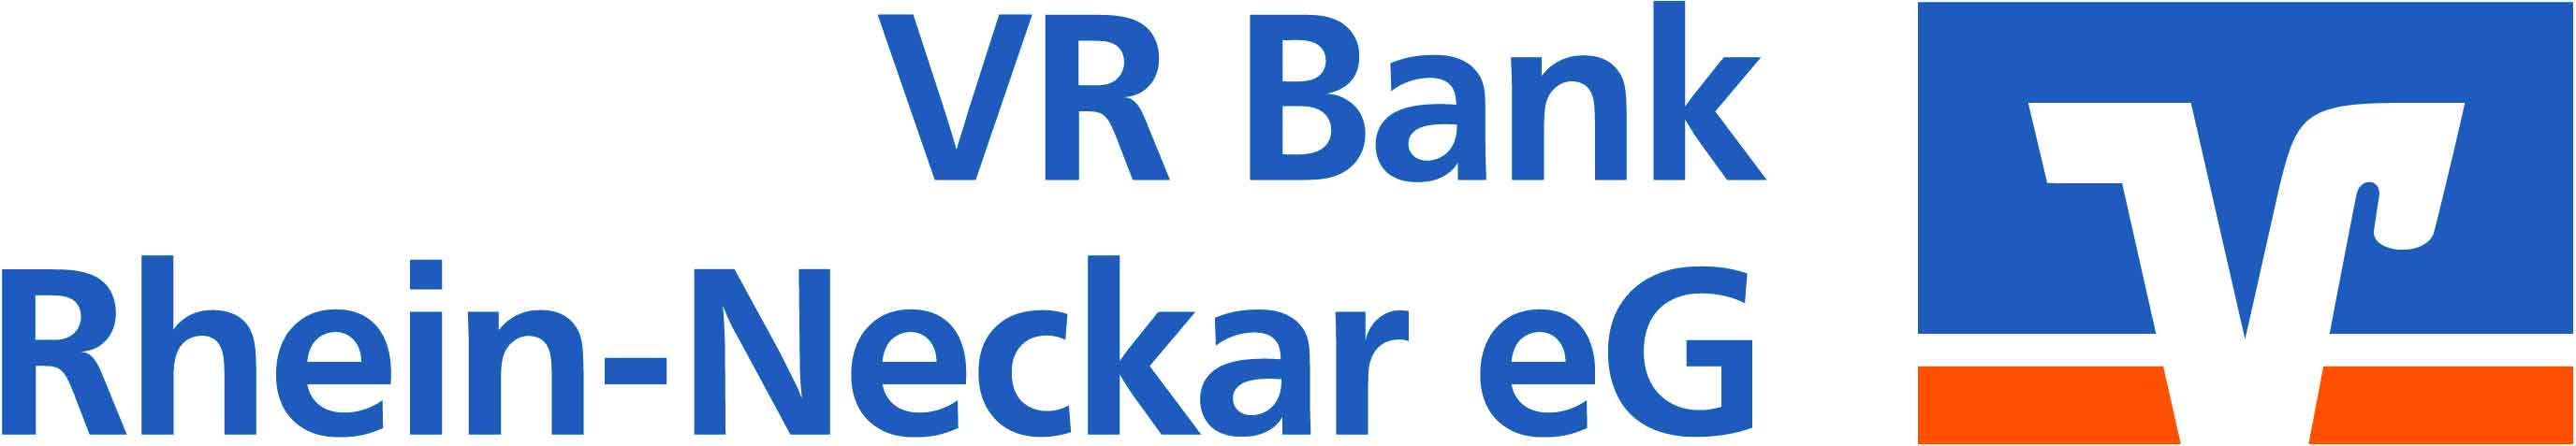 VR-Bank Rhein-Neckar eG